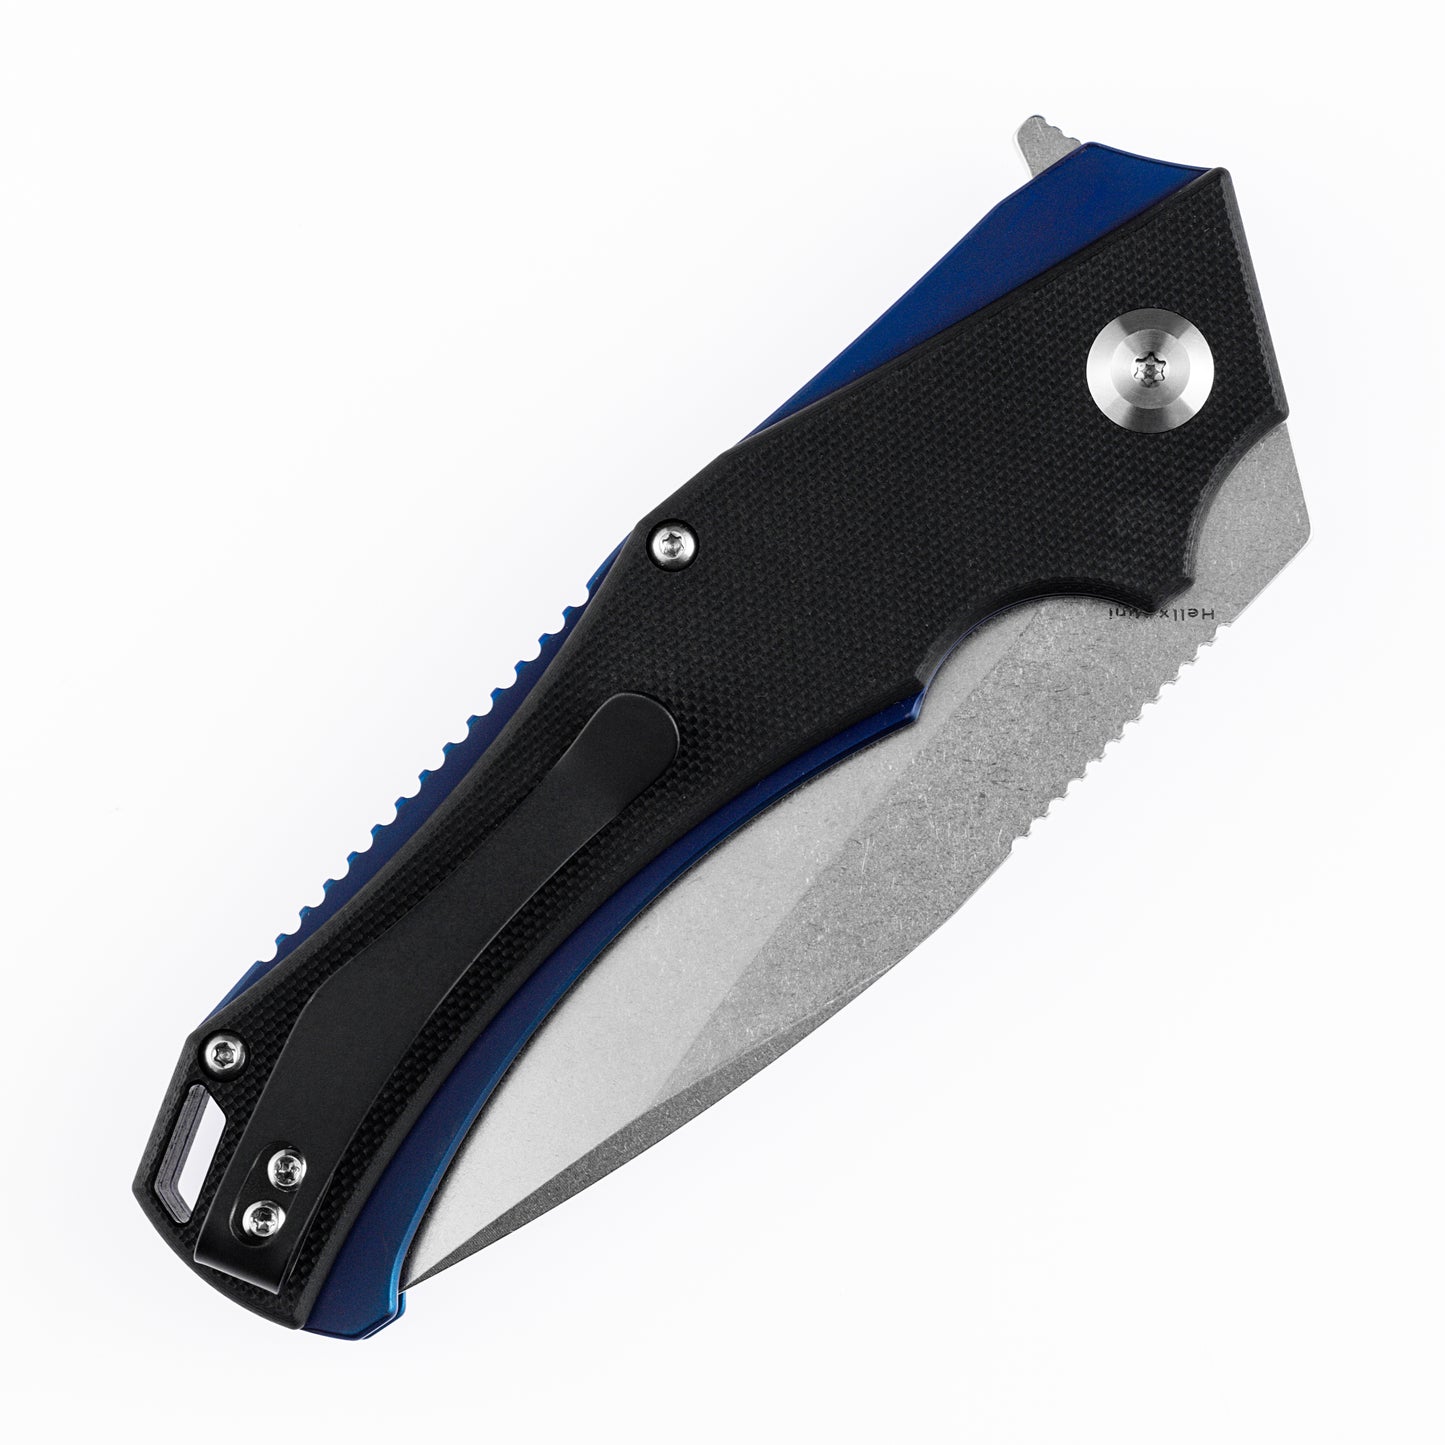 Kansept Mini Hellx 3.25" Stonewashed D2 Black G10 Folding Knife by Mikkel Willumsen T2008A1